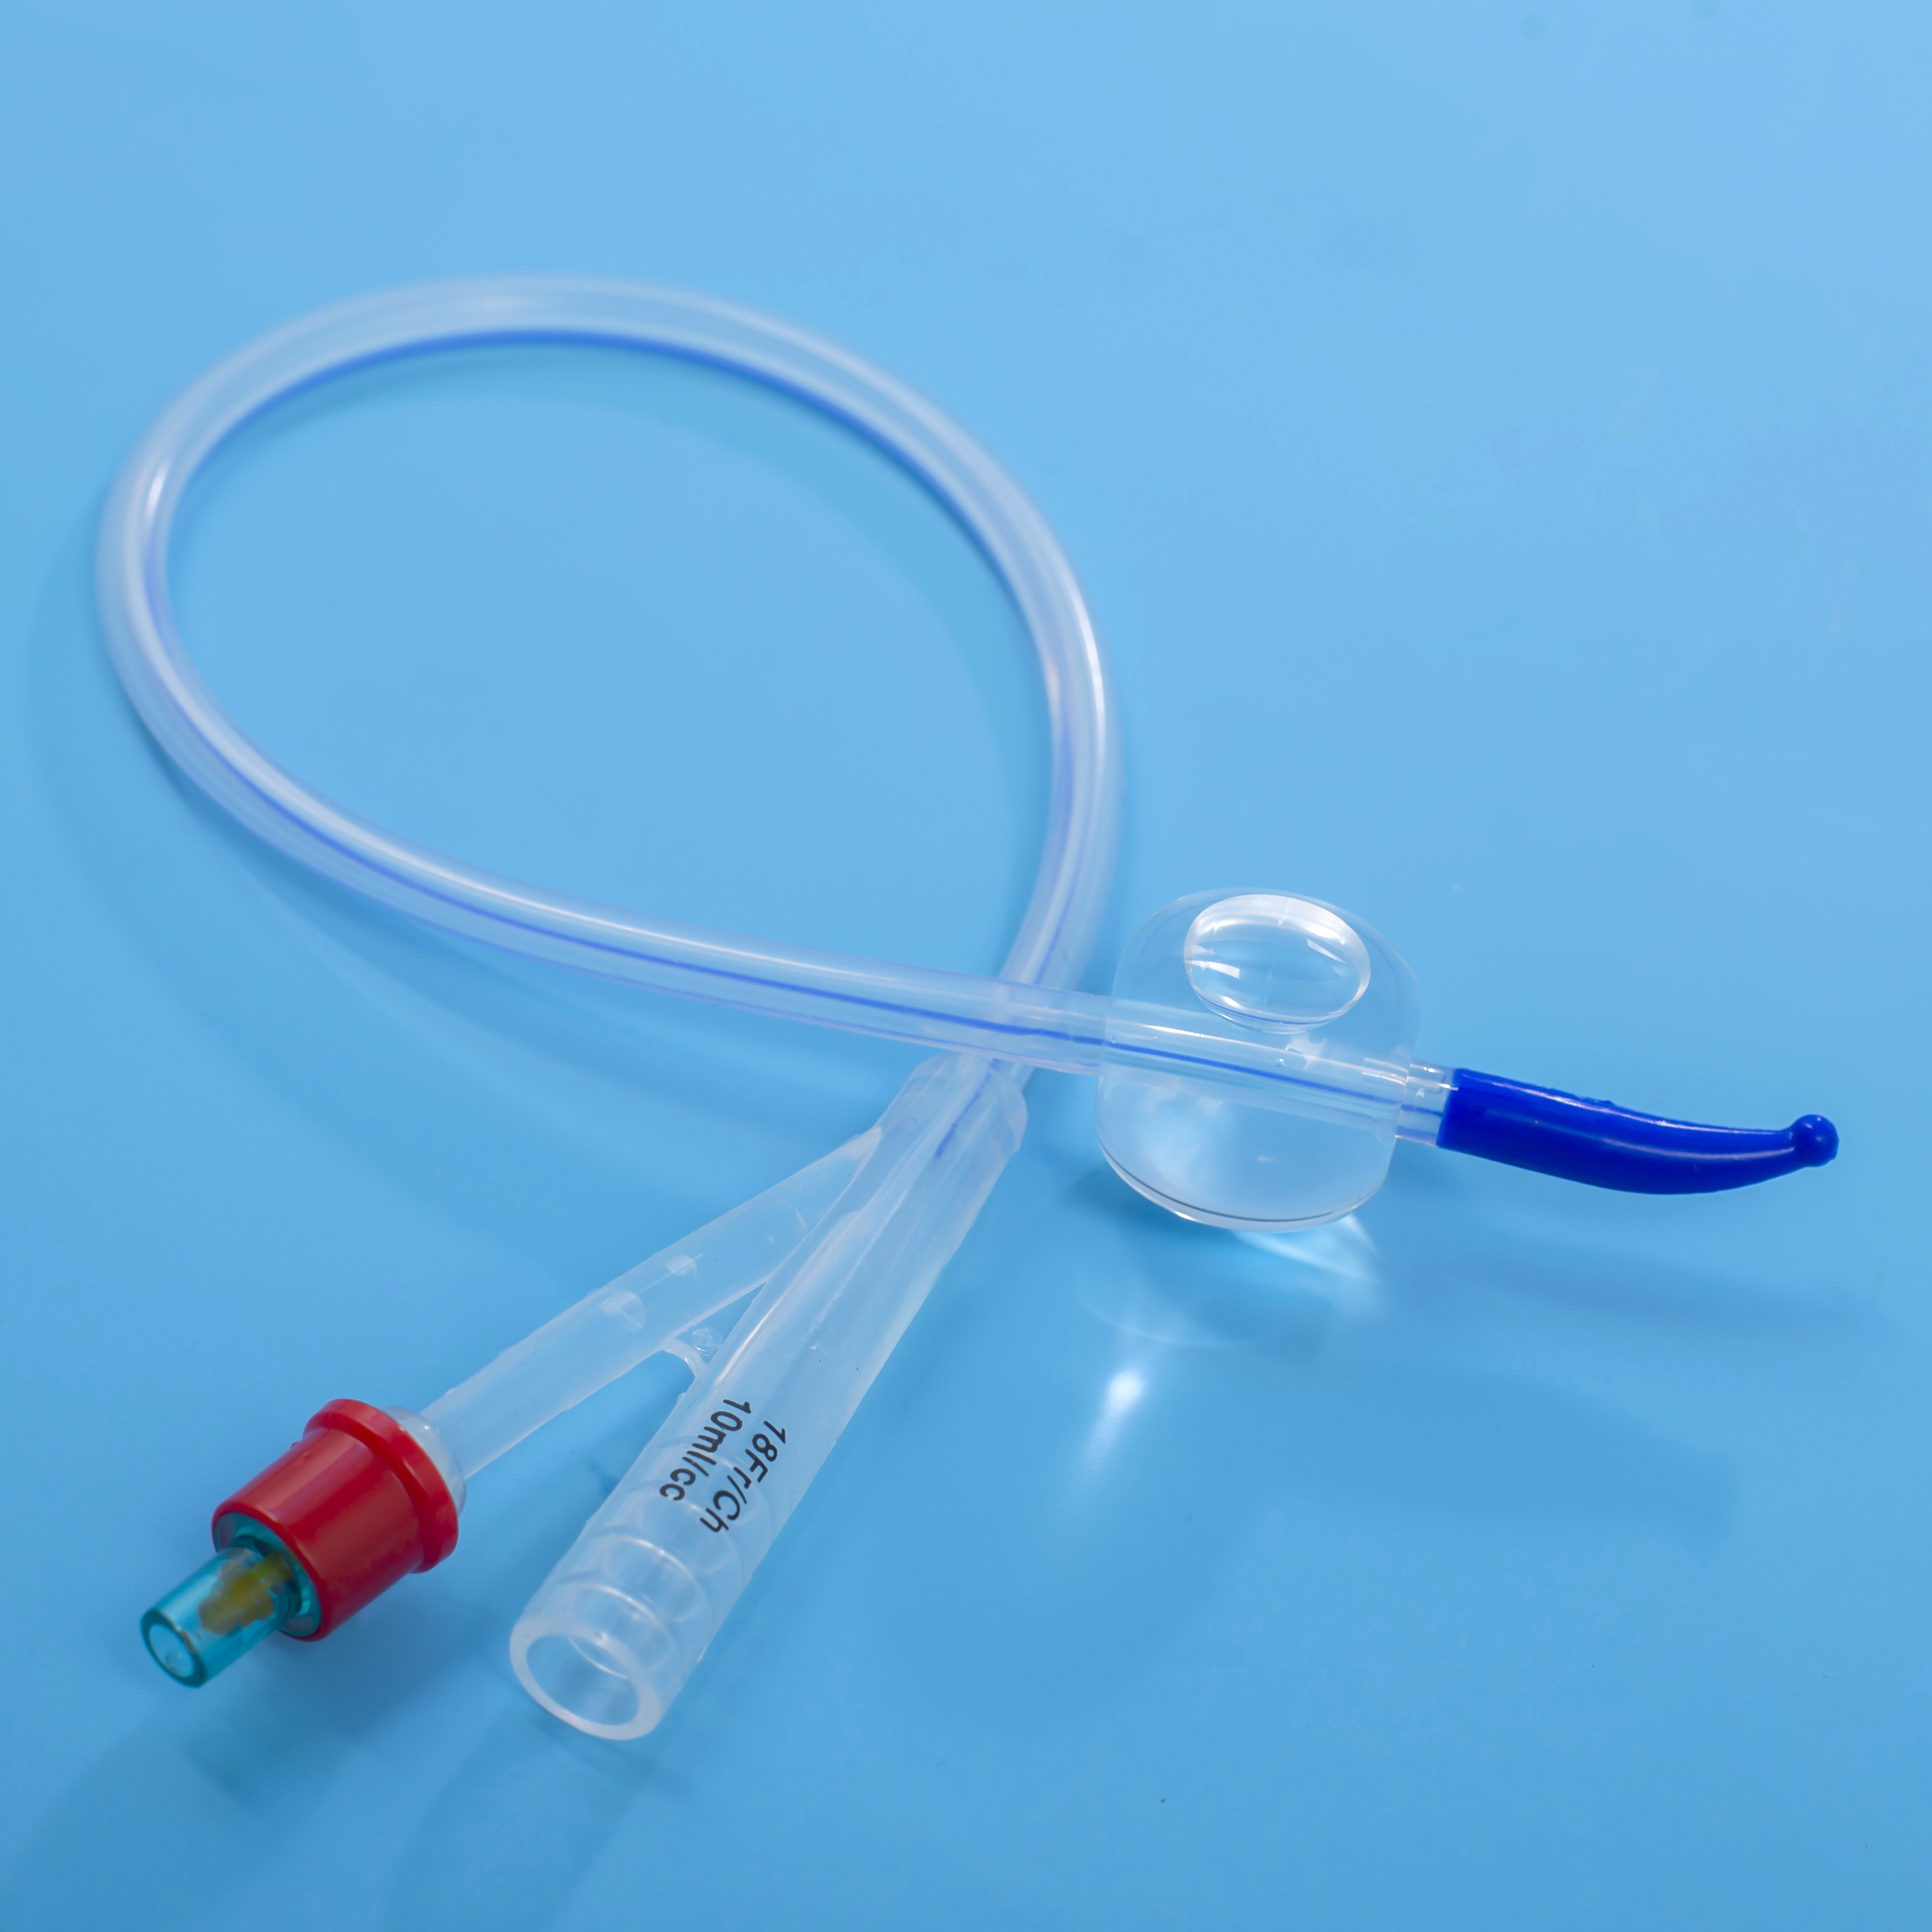 2 Way Silicone Foley Catheter sareng Unibal Integral Balon Téhnologi Integrated Flat Balon Tiemann Tipped Urethral Use Men